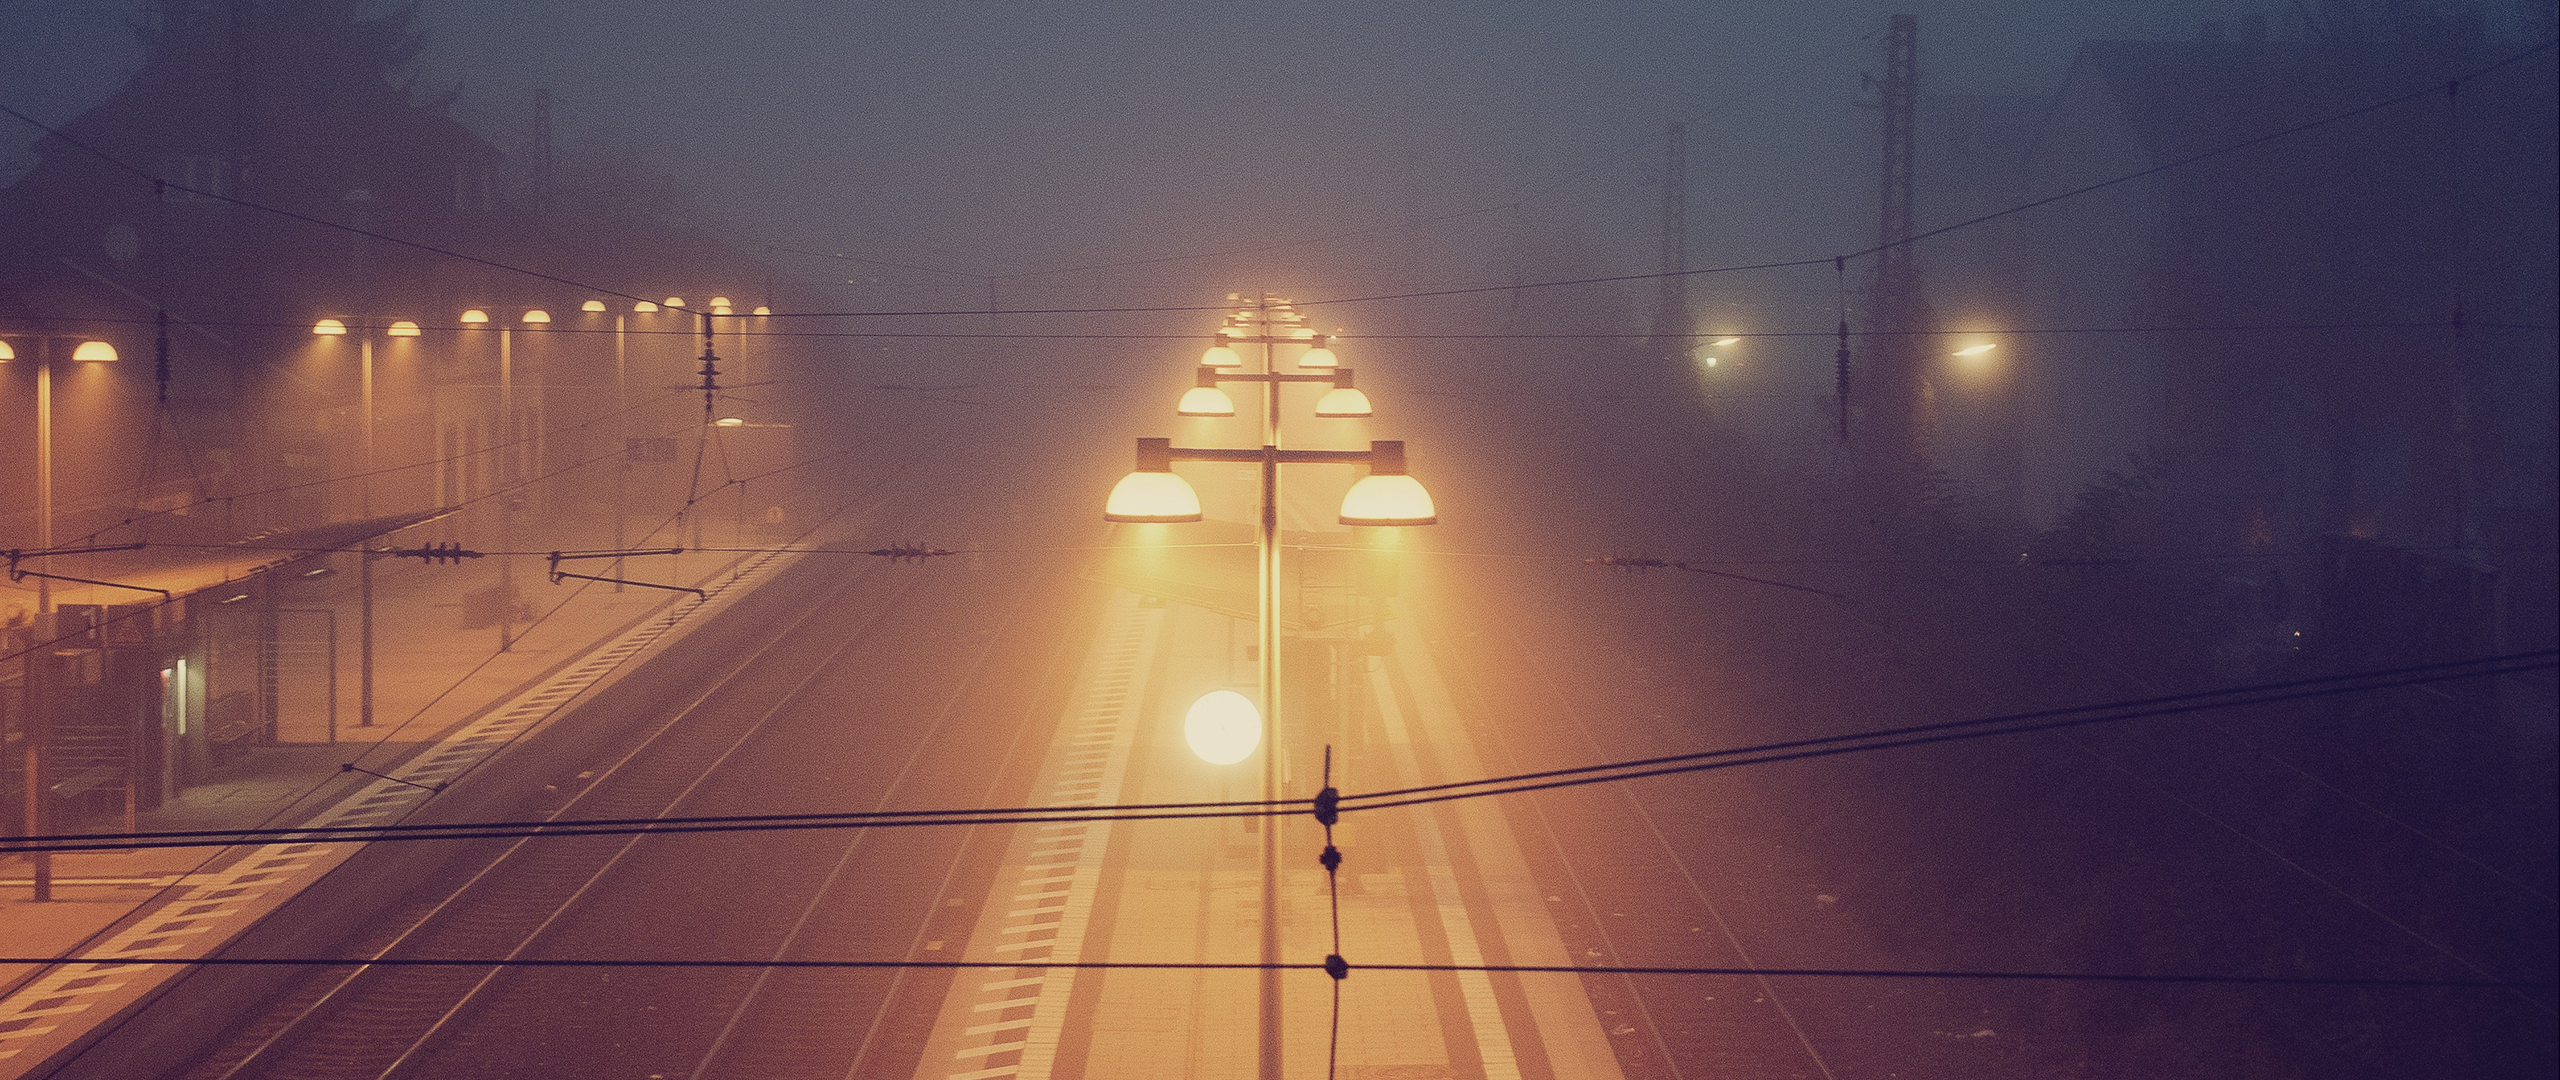 General 2560x1080 ultrawide photography mist train station railway lights low light